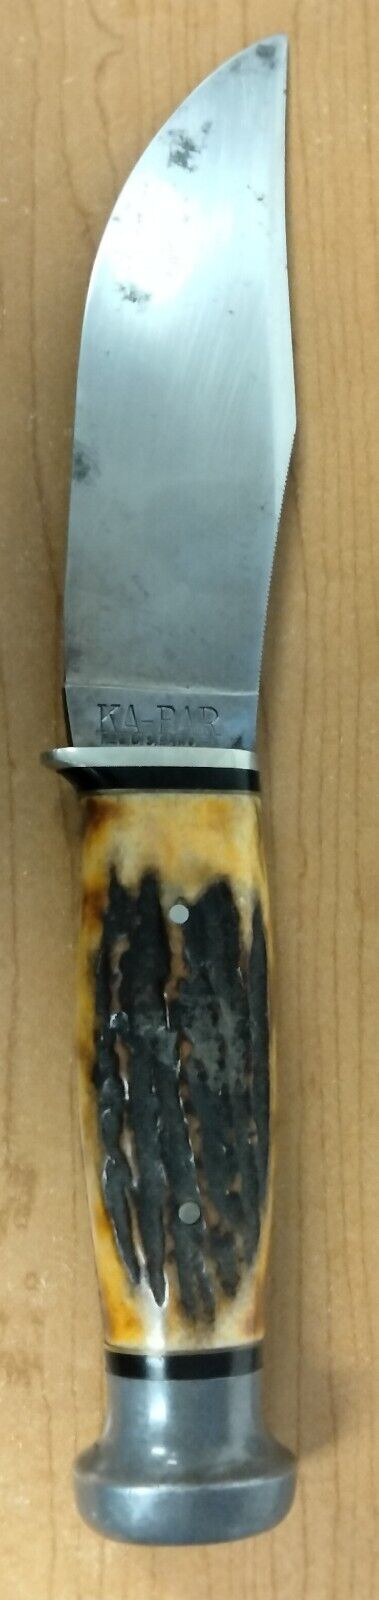 KA-BAR, Union Cutlery Co. Olean NY. Fixed Blade Hunting Knife, Genuine Stag